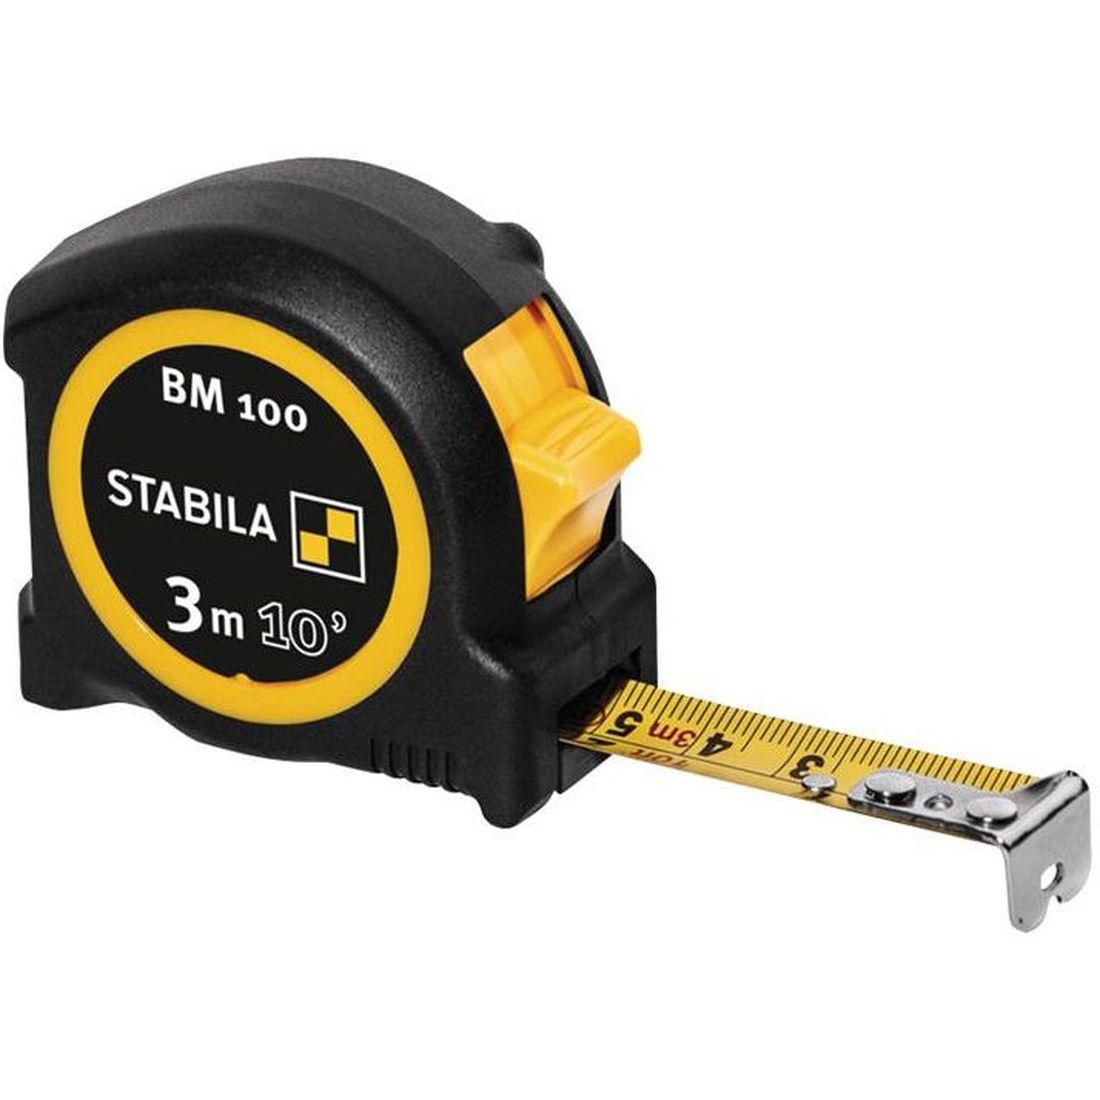 Stabila BM 100 Compact Pocket Tape 3m/10ft (Width 19mm)                                 